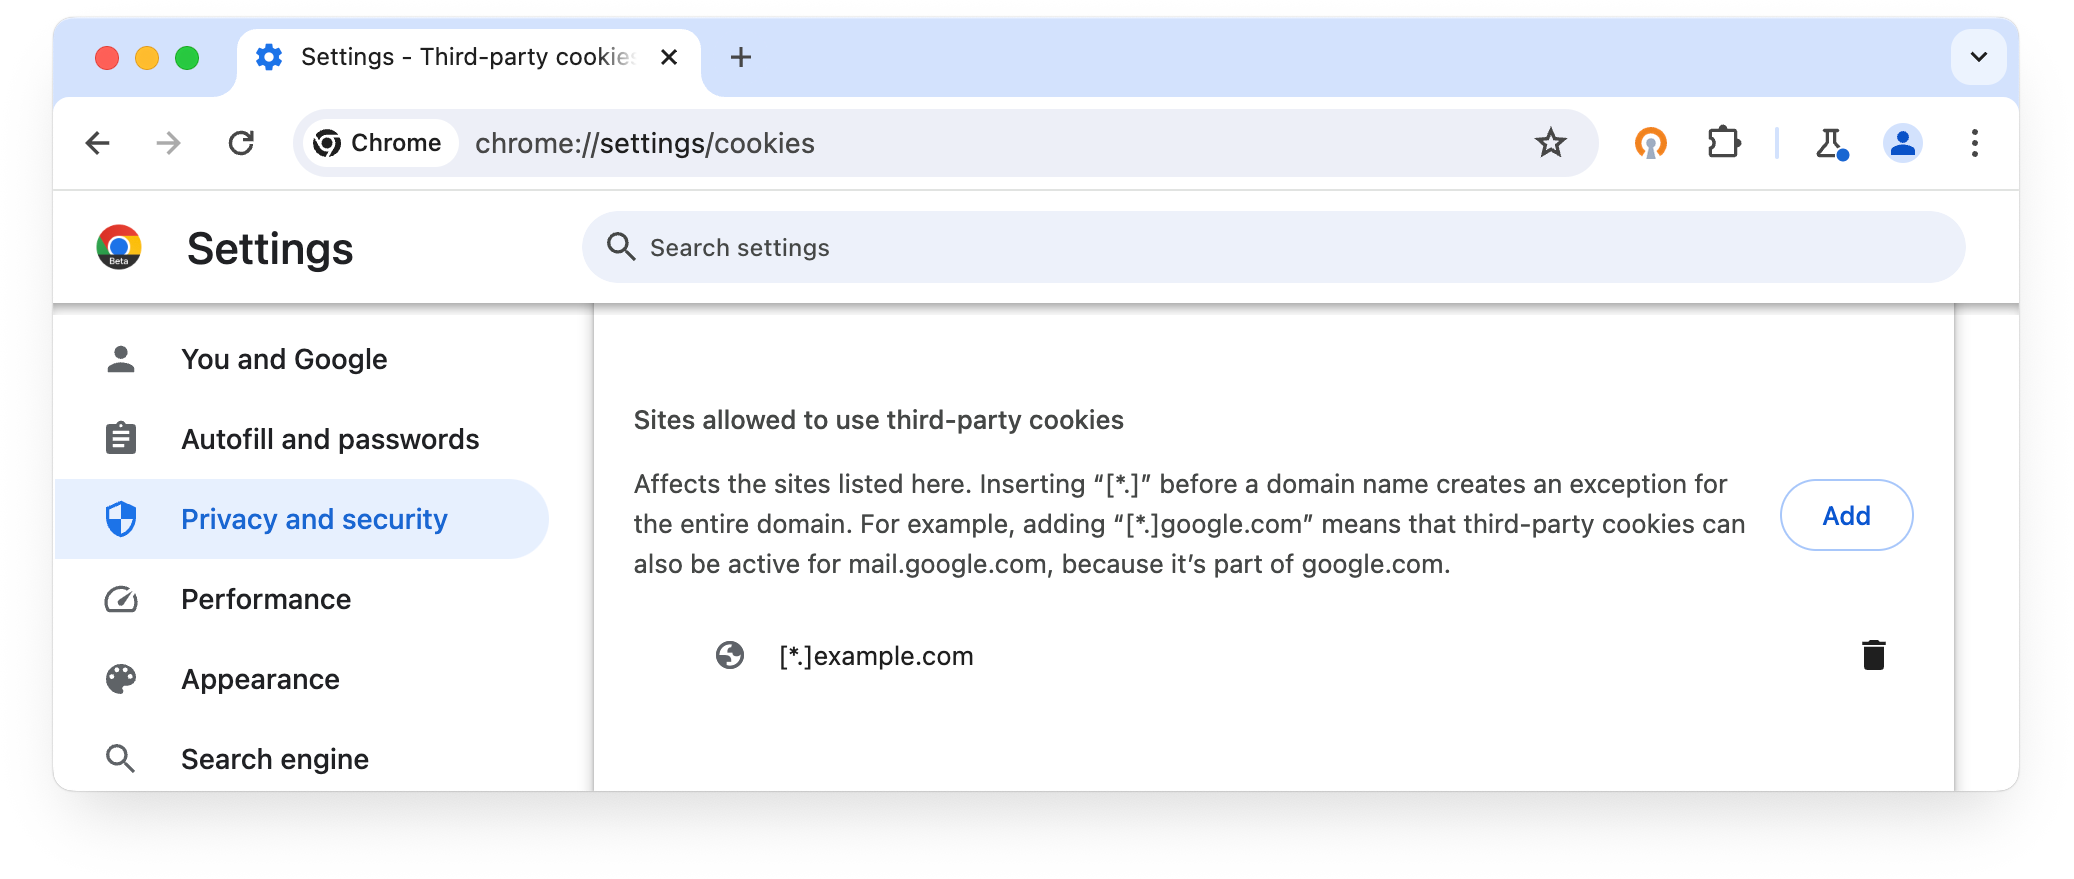 chrome://settings/cookies: сайтам разрешено использовать сторонние файлы cookie.